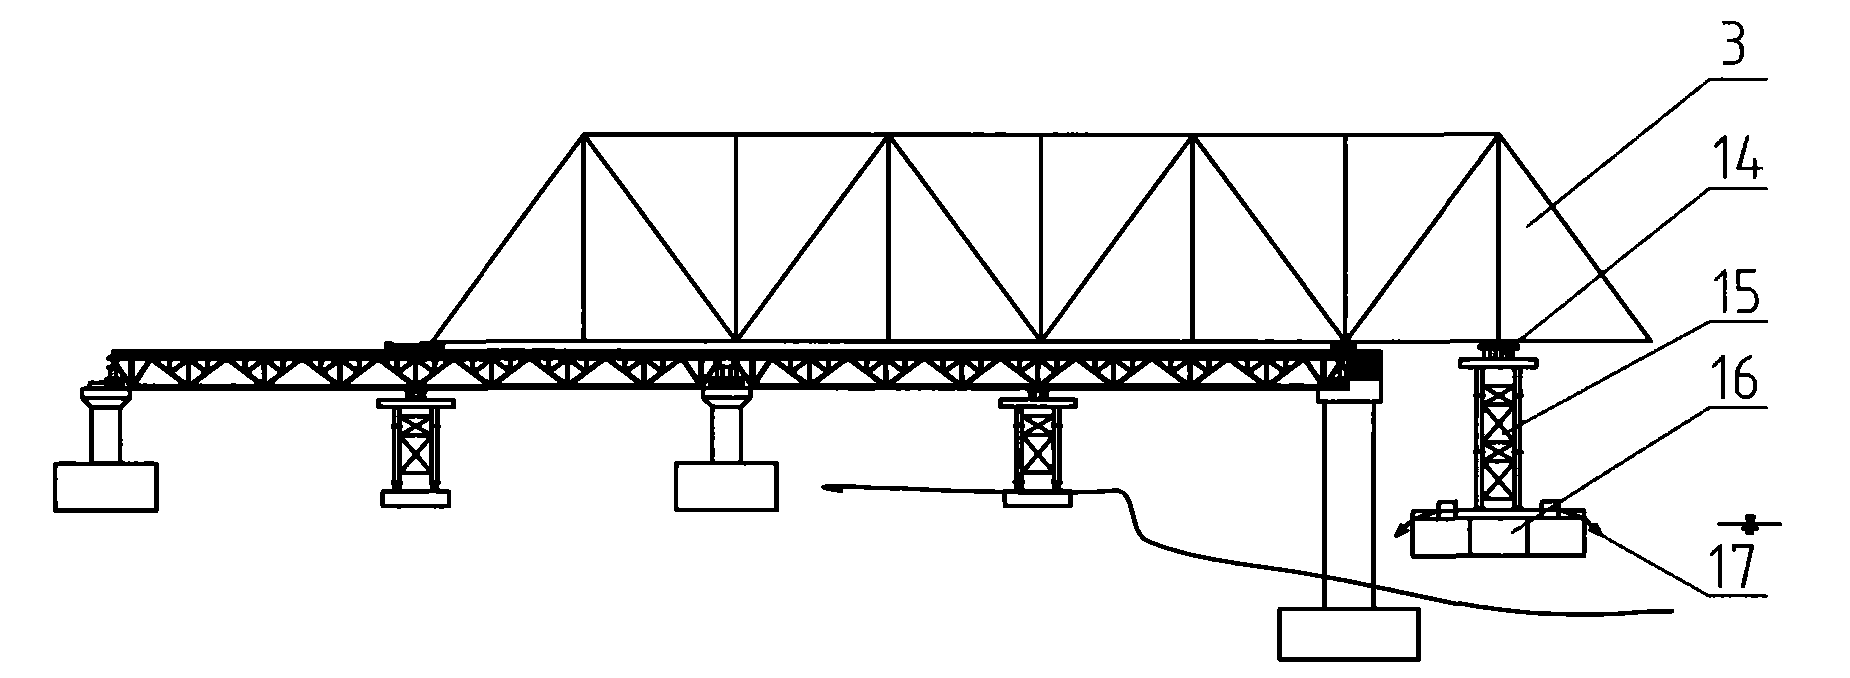 Construction method for erecting steel truss girder on uplift pushing tow